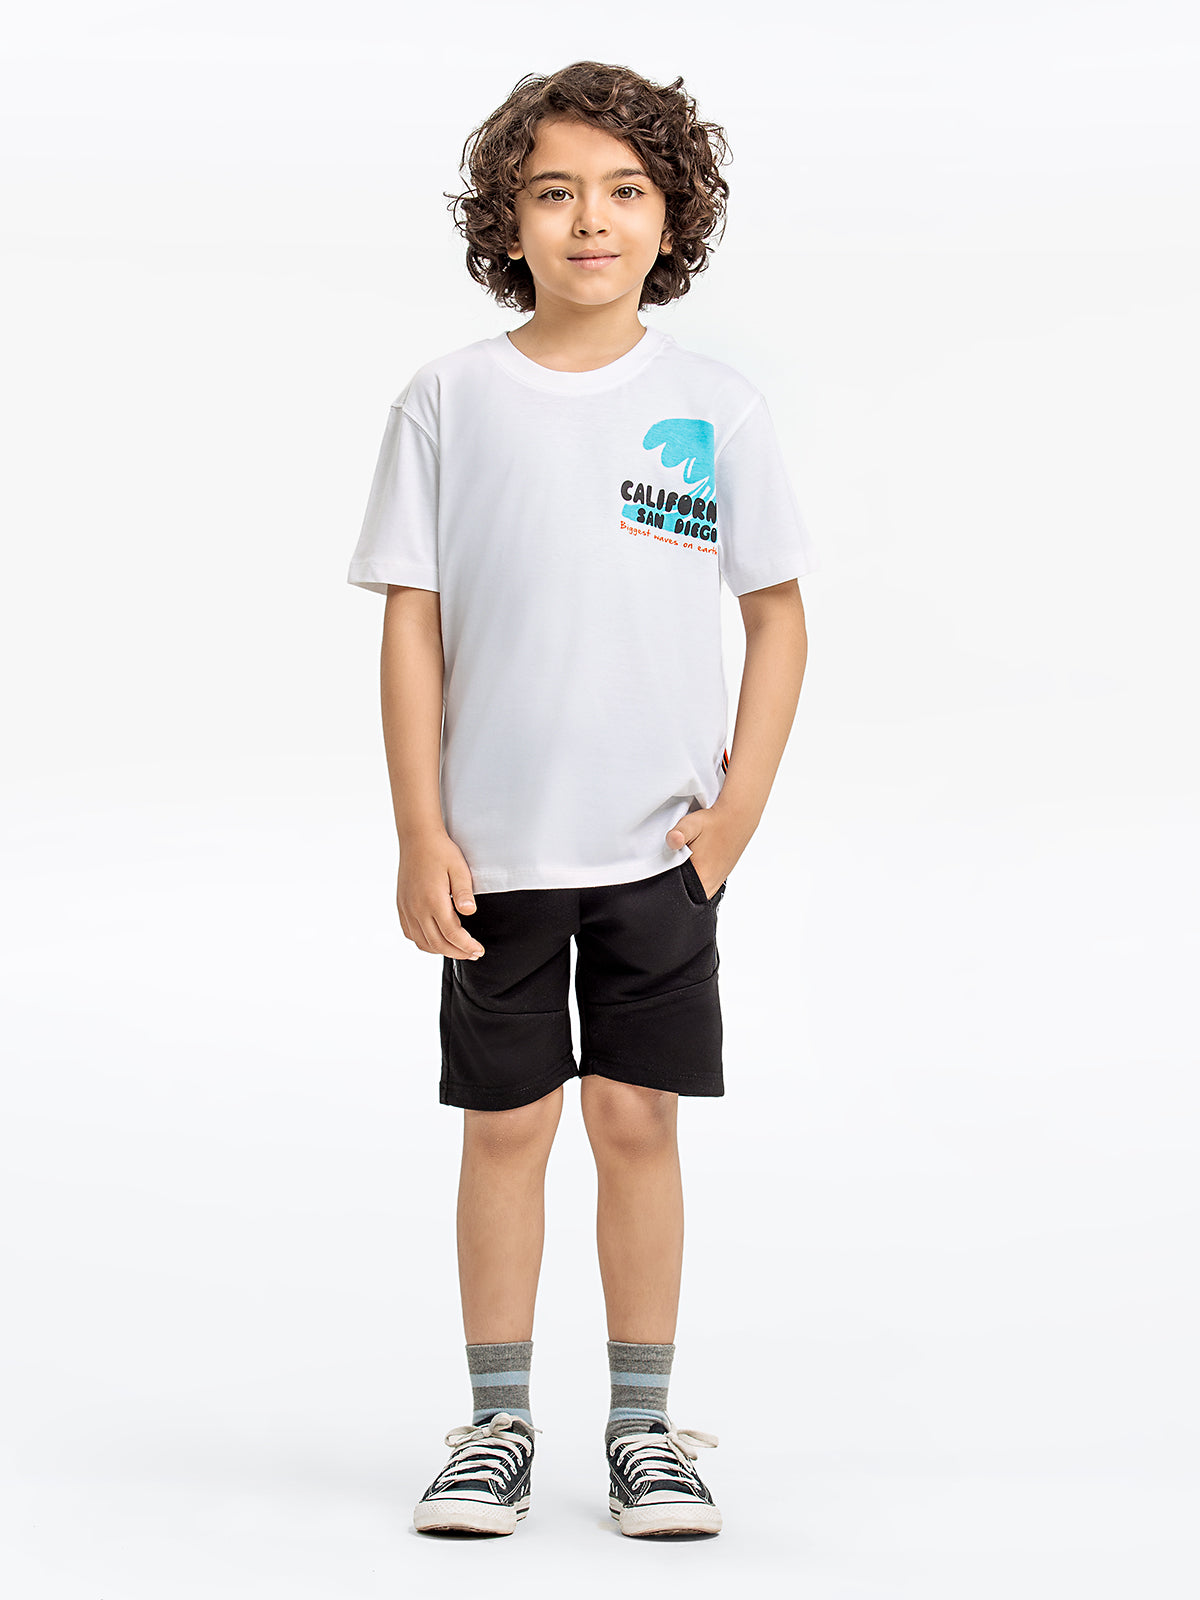 Boy's White T-Shirt - EBTTS24-030